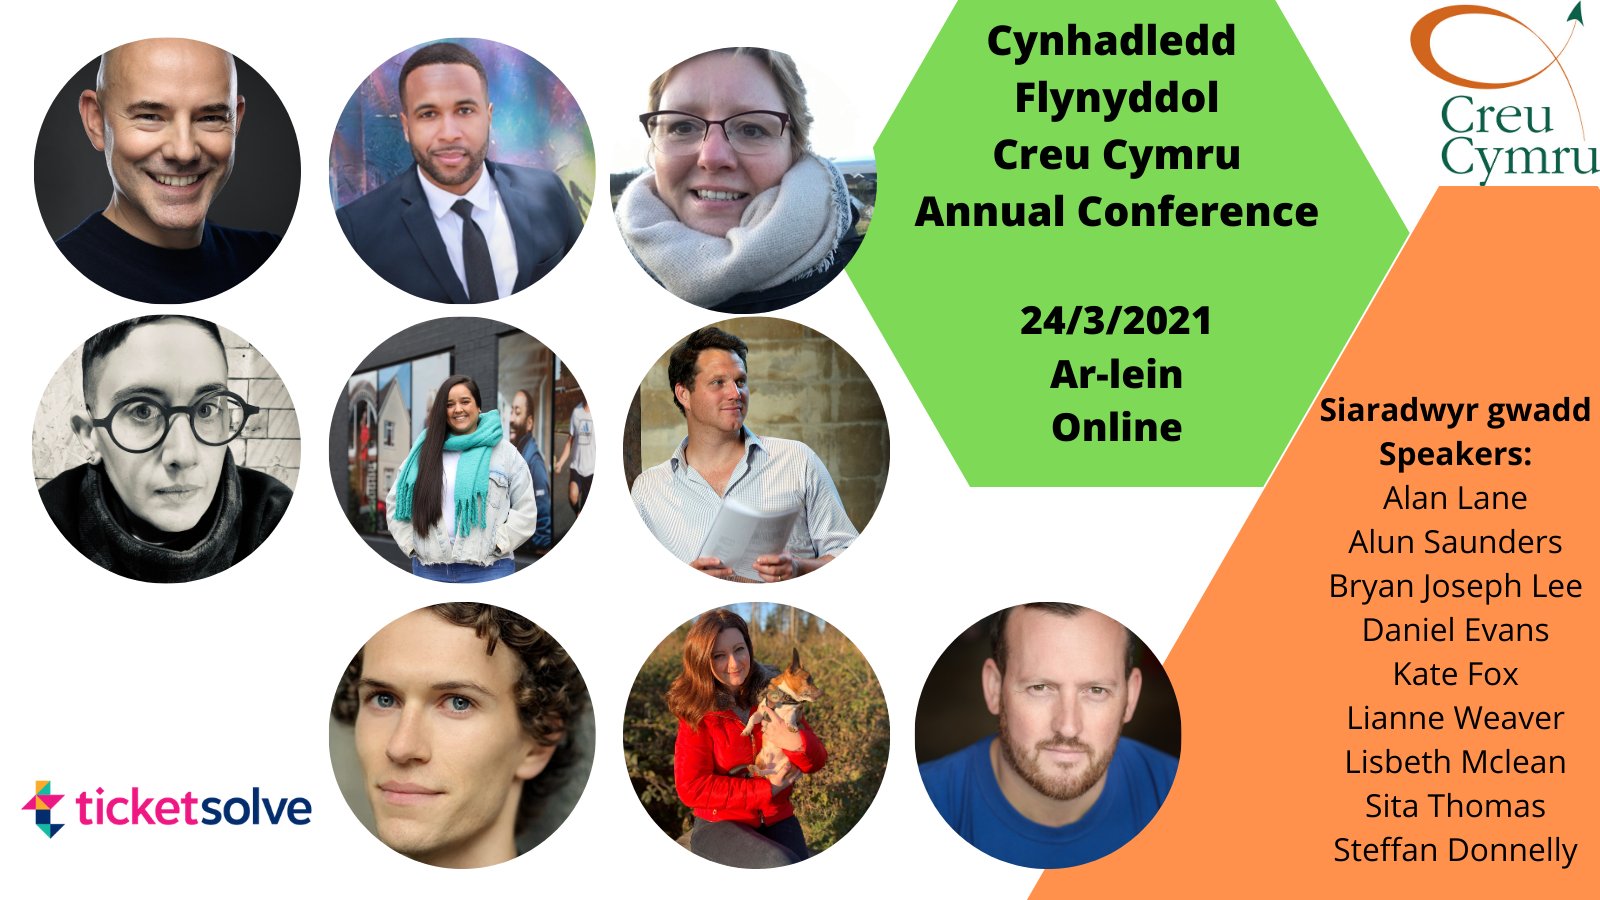 Creu Cymru 2021 Annual Conference Sponsored by Ticketsolve